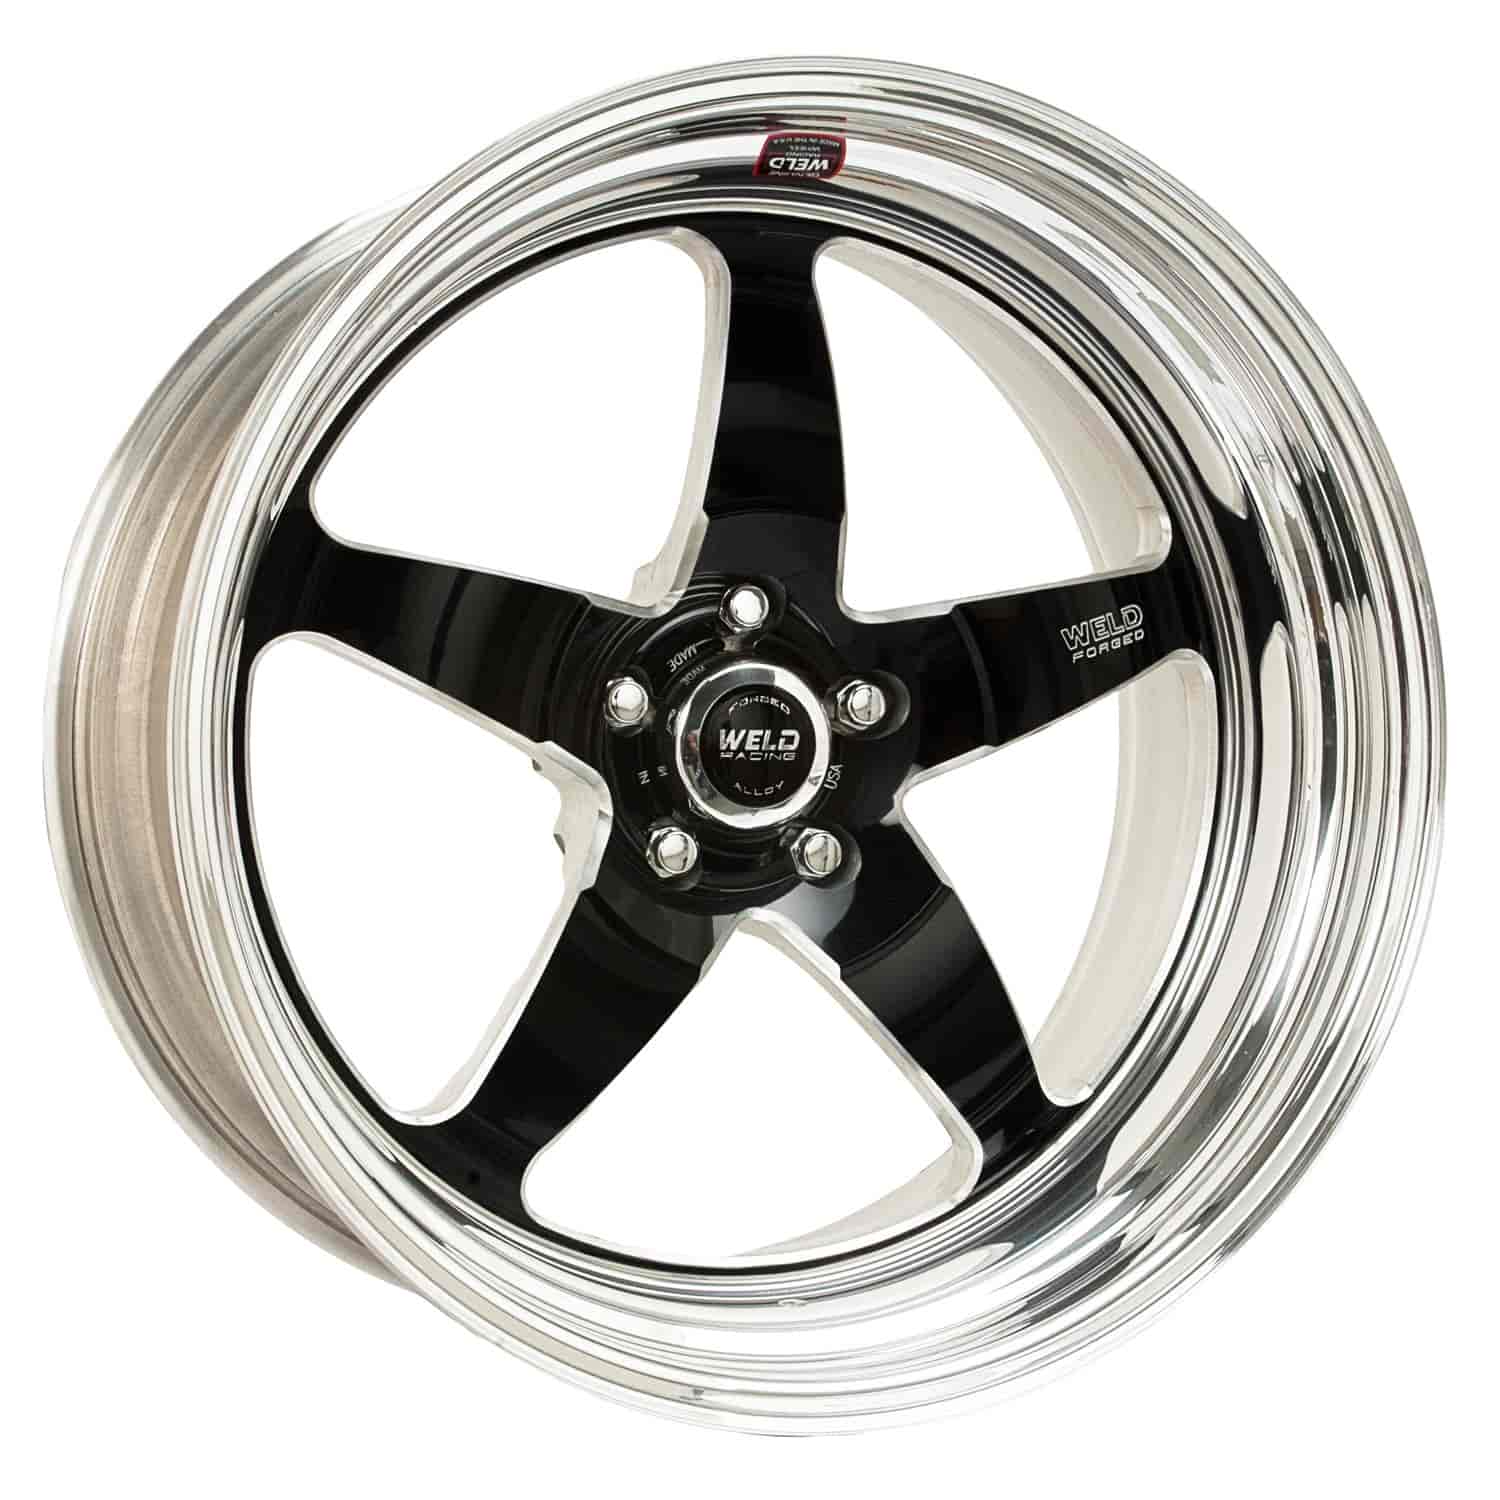 RT-S Series Wheel Size: 17" x 10" Bolt Circle: 5 x 115mm Rear Spacing: 6.70" Black Offset: +30.48mm